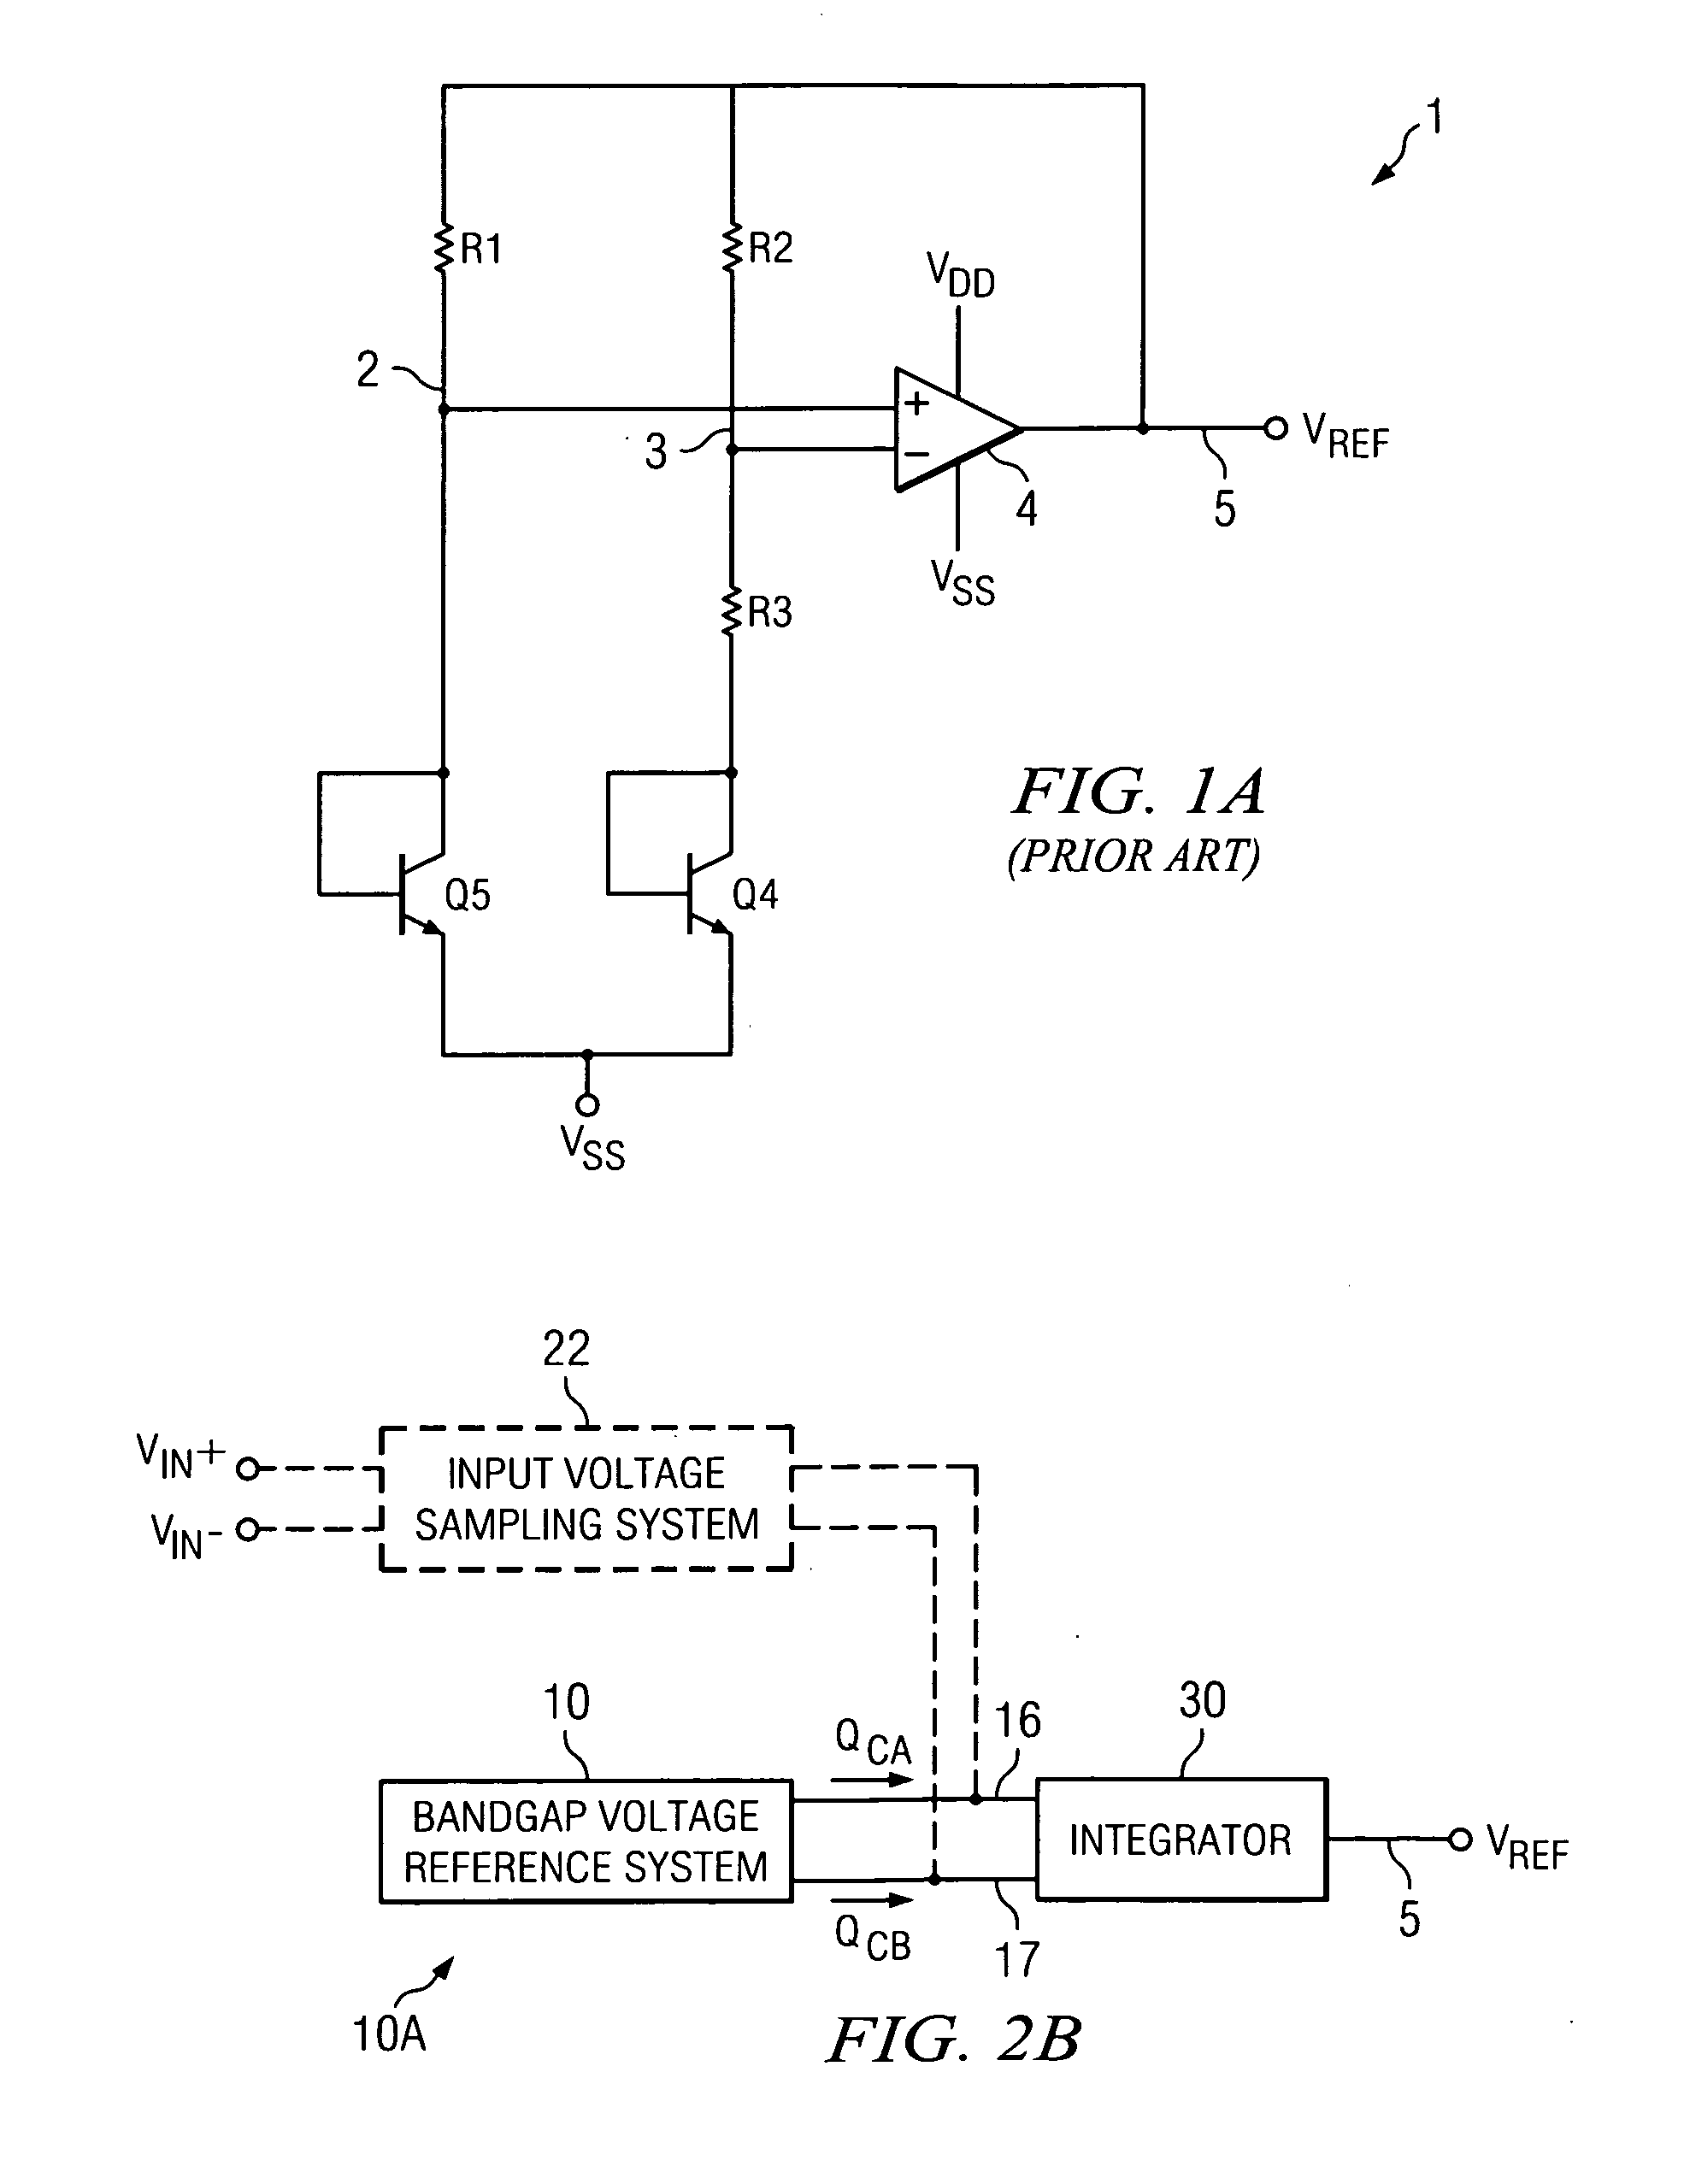 Bandgap reference circuit and method